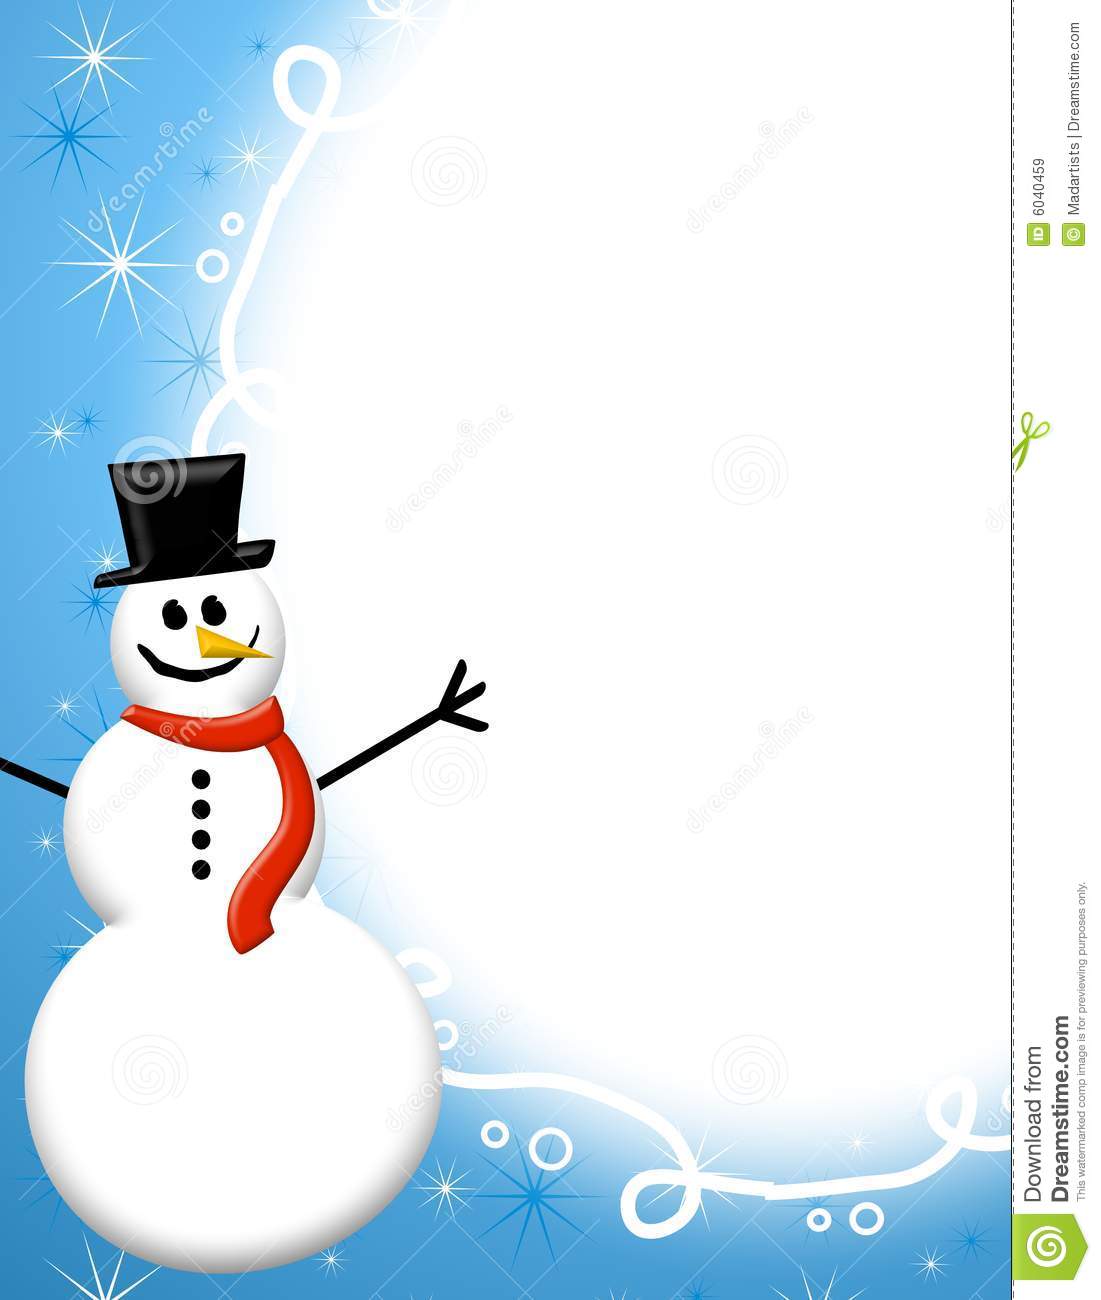 Border Illustration Featuring A Smiling Snowman Set Against Blue